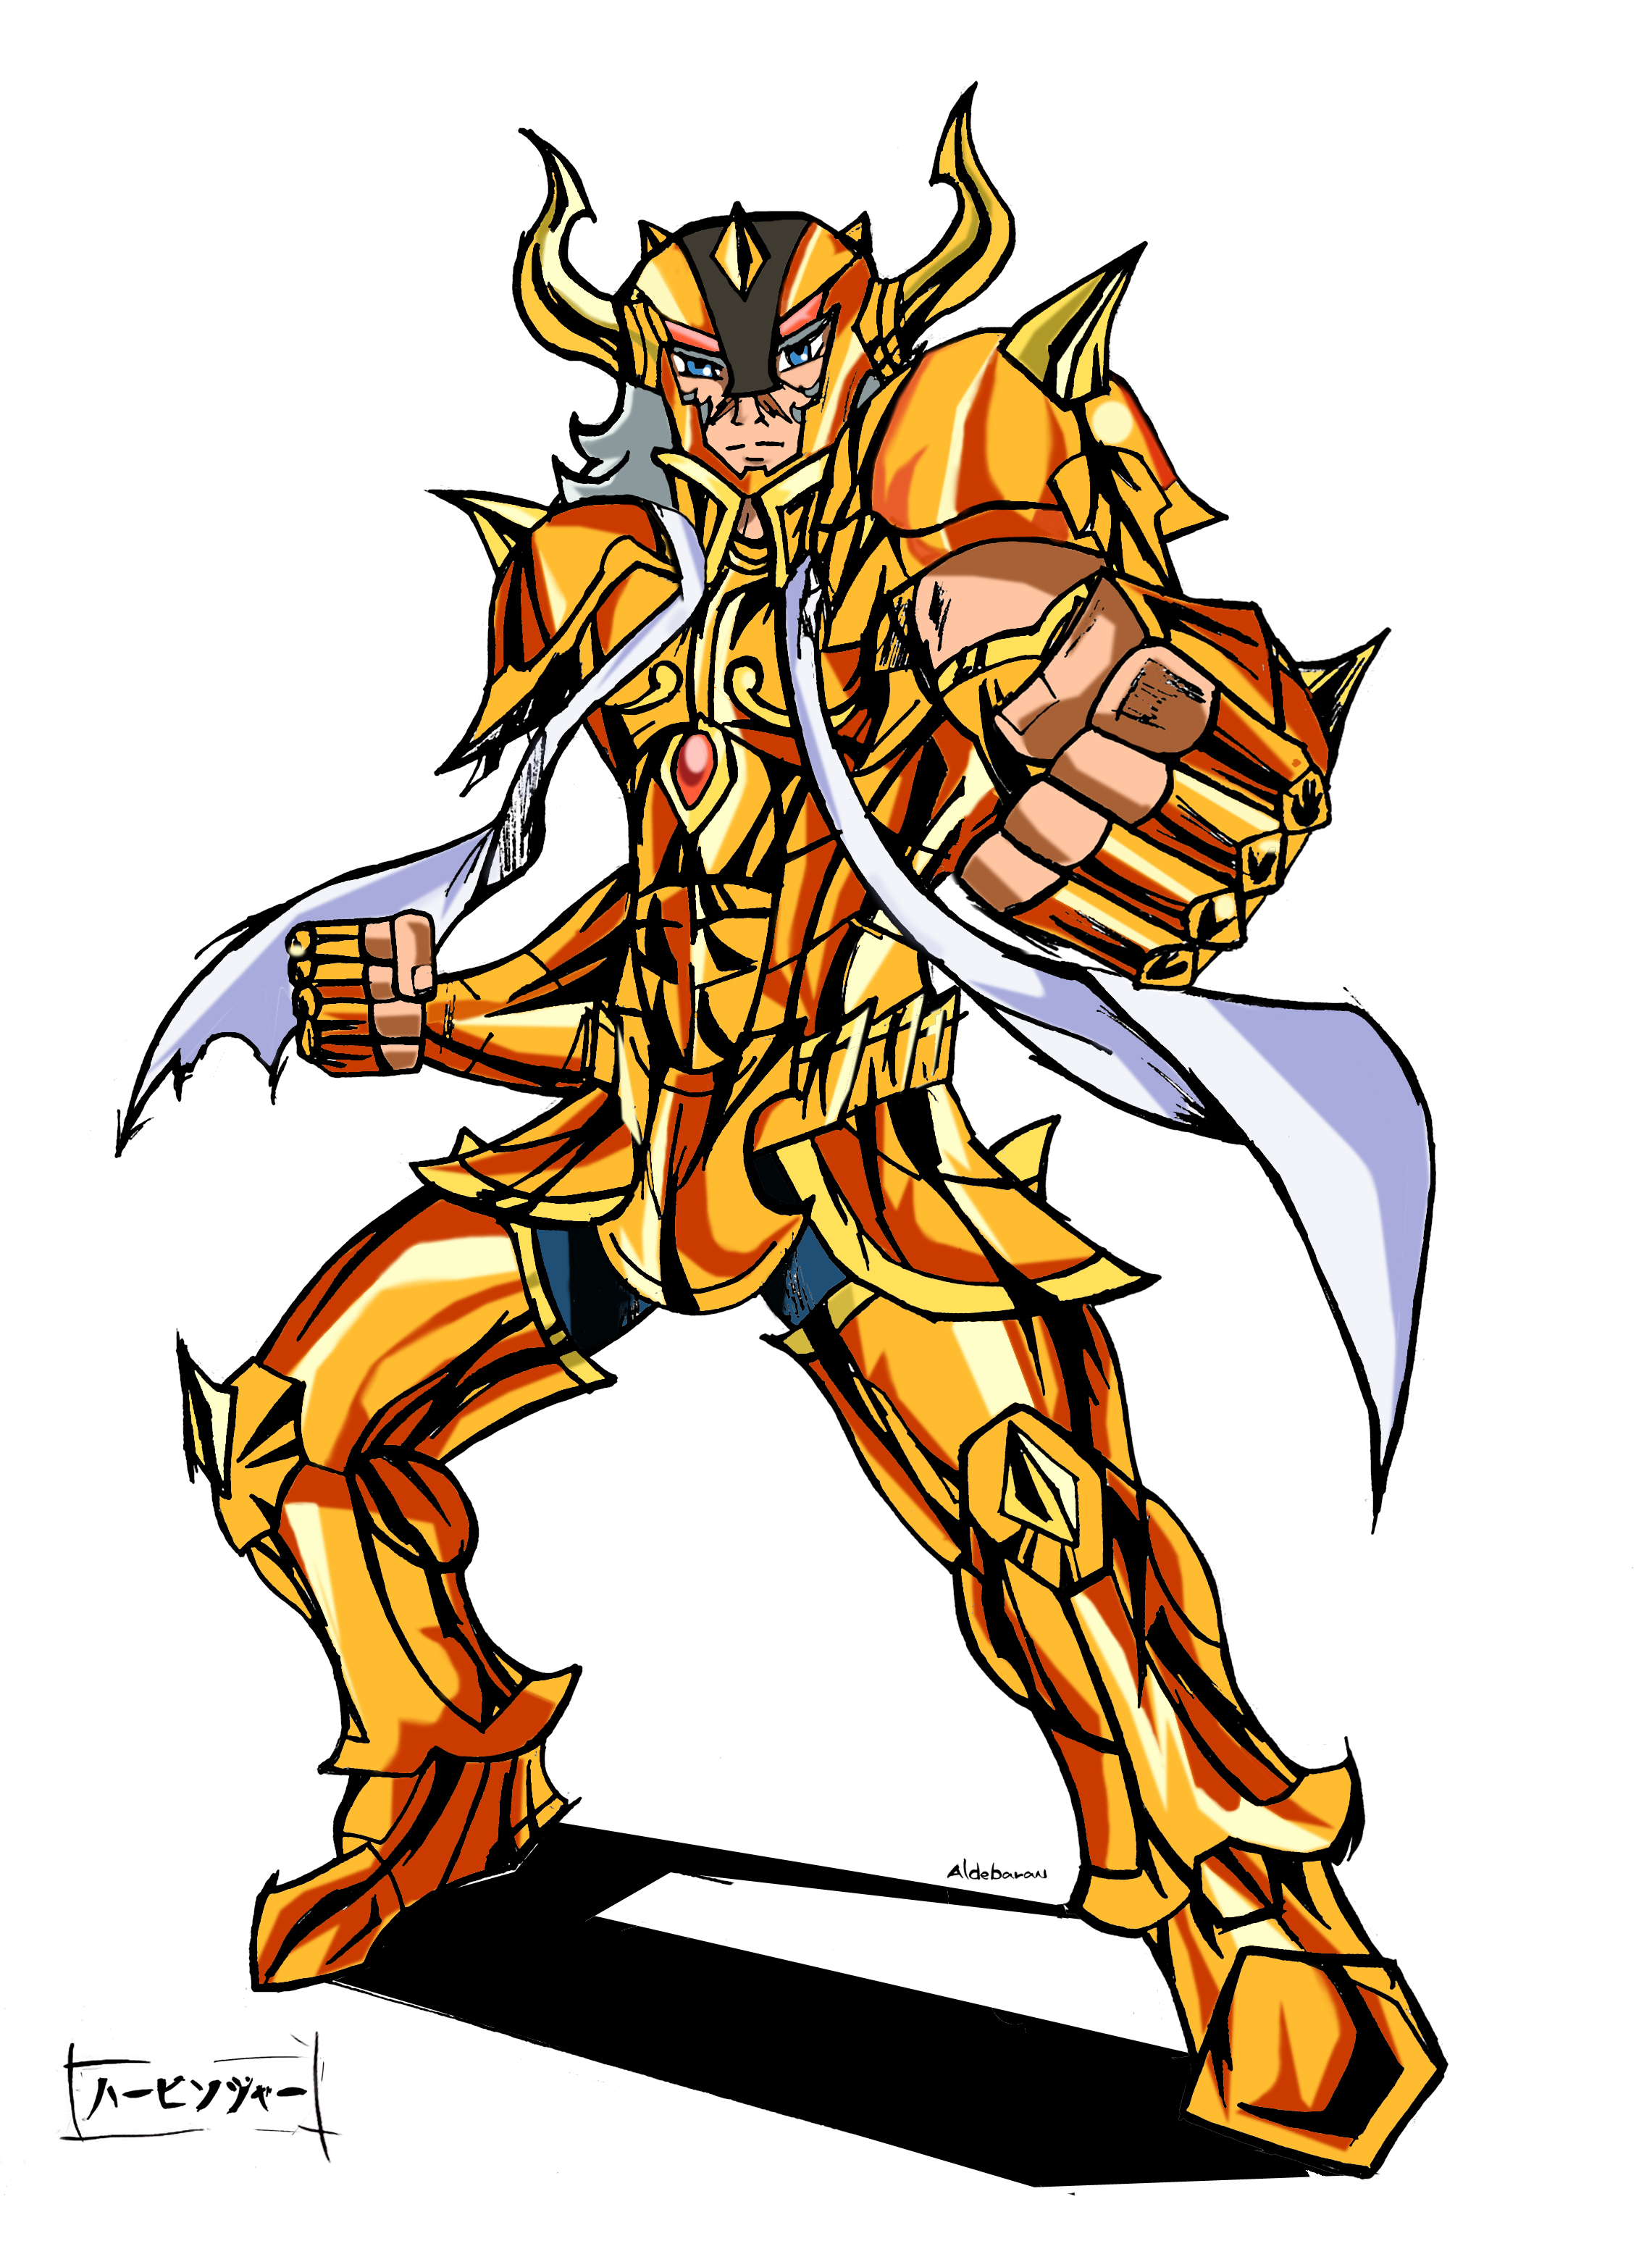 Saint Seiya Omega: Caballeros Legendarios by JohnnyNoise on DeviantArt